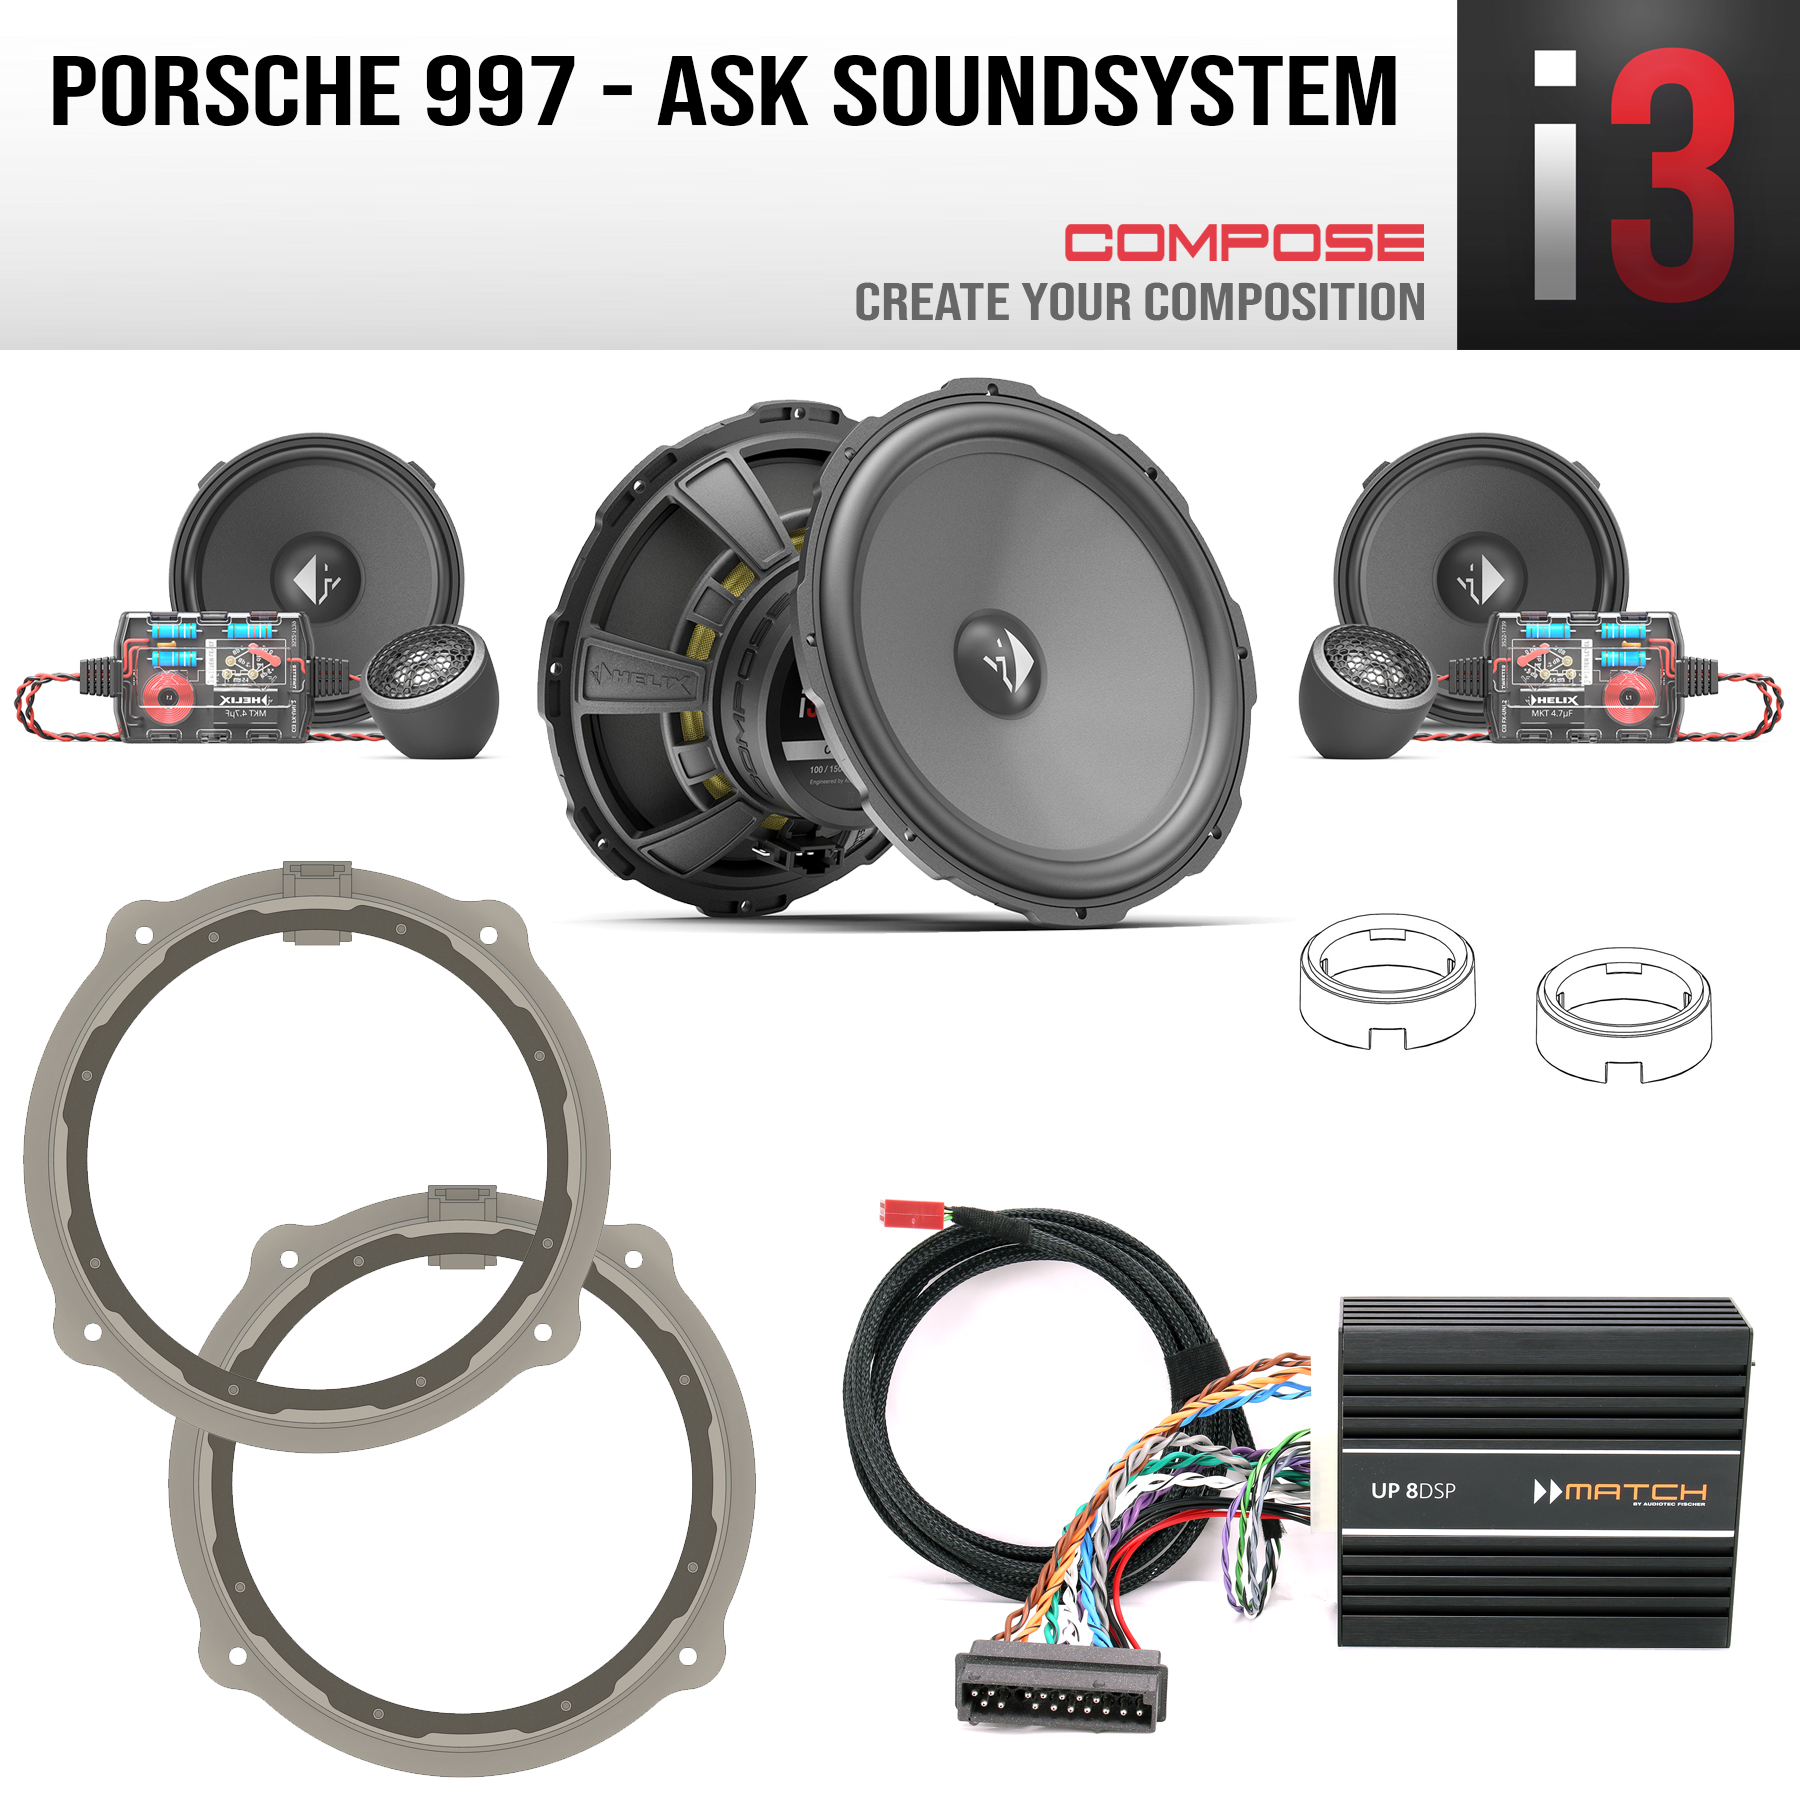 Porsche 911 Typ 997 ASK Soundsystem